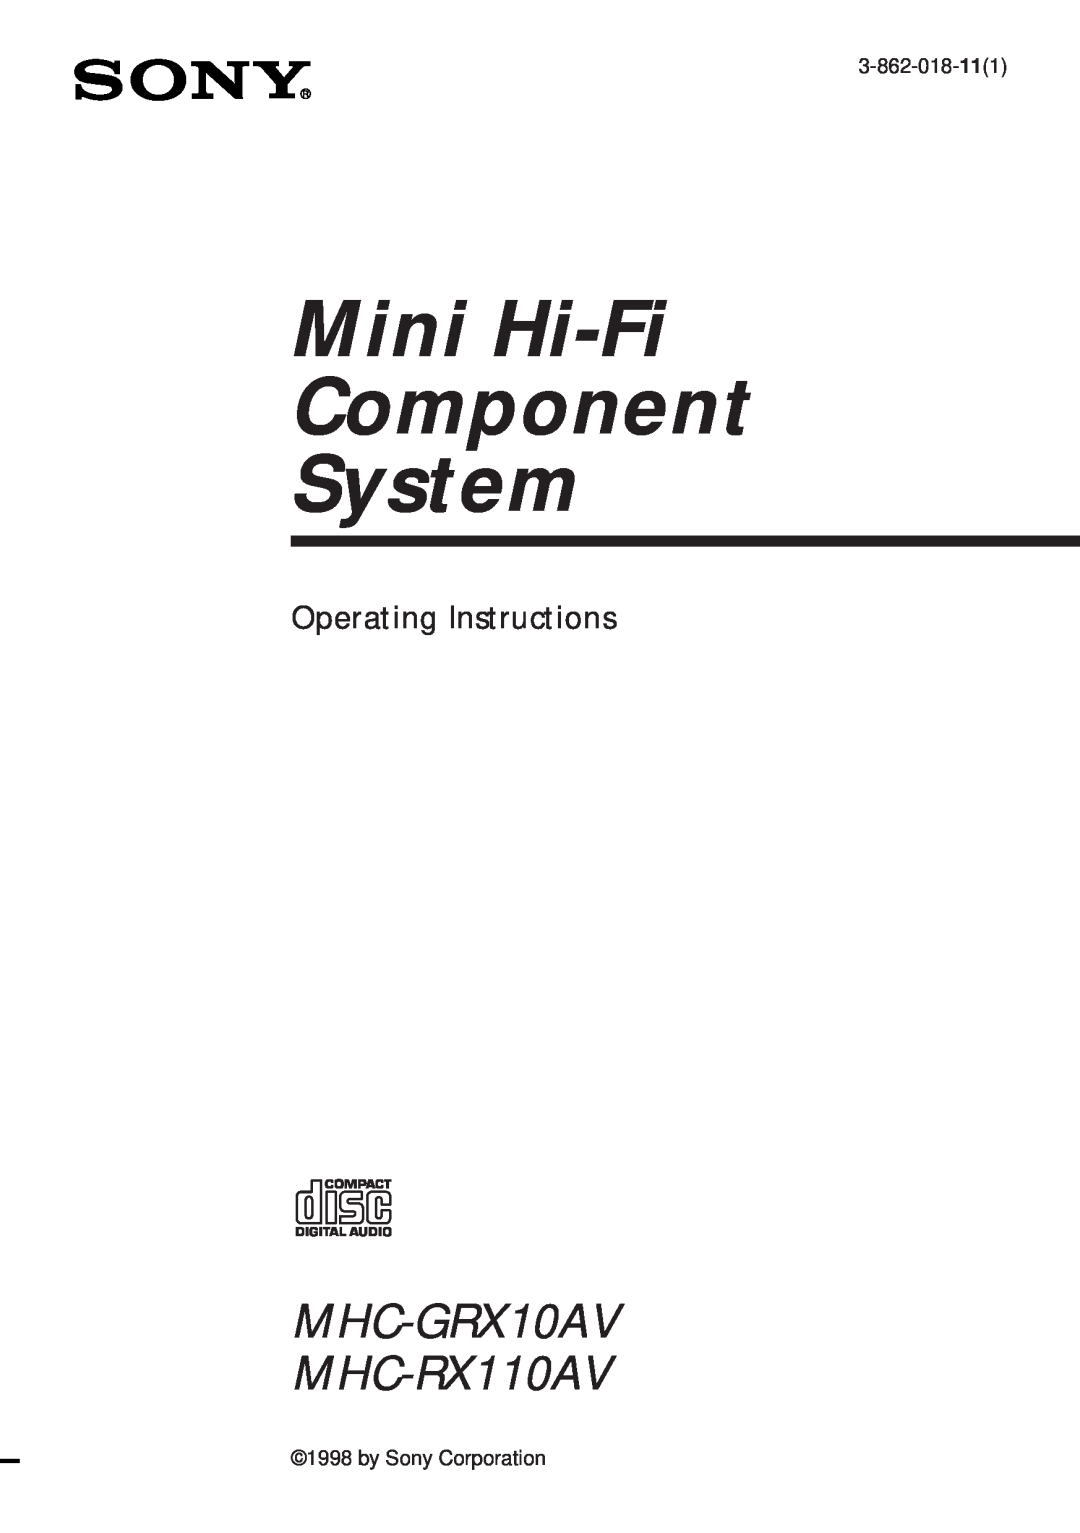 Sony MHC-GRX10AV operating instructions 3-862-018-111, by Sony Corporation, Mini Hi-Fi Component System 